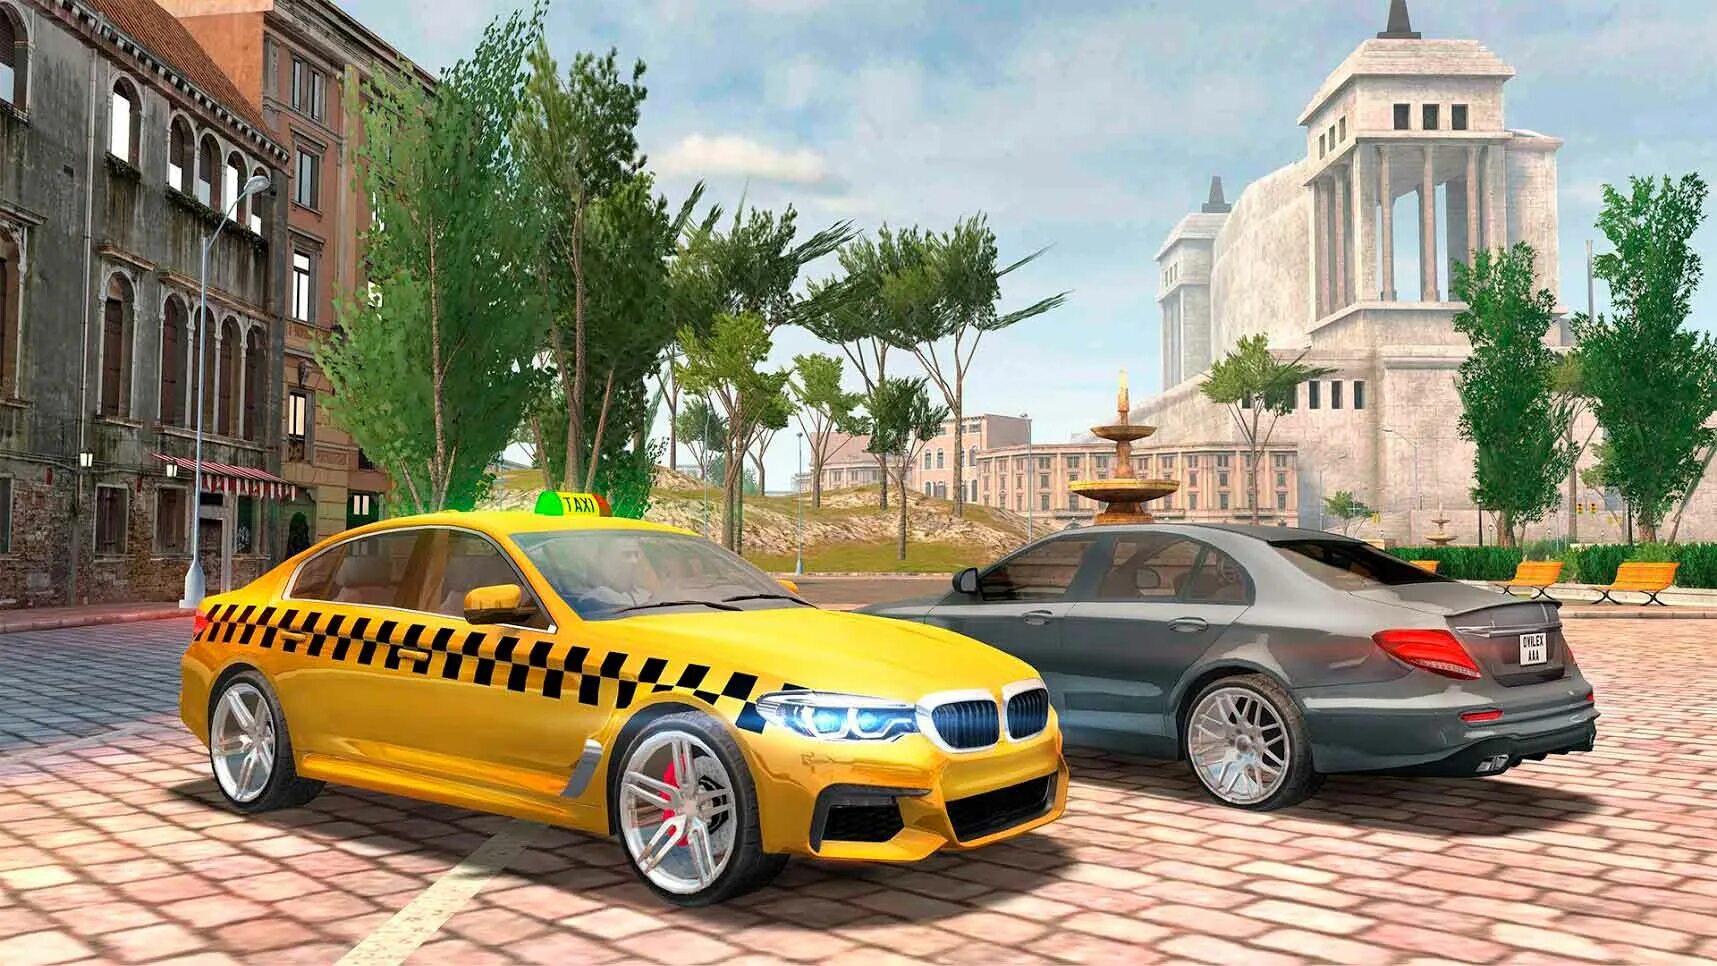 Taxi SIM 2022 Evolution. Taxi Simulator 2020. Симулятор таксиста 2020. Андроид Taxi SIM 2020. Можно игра такси